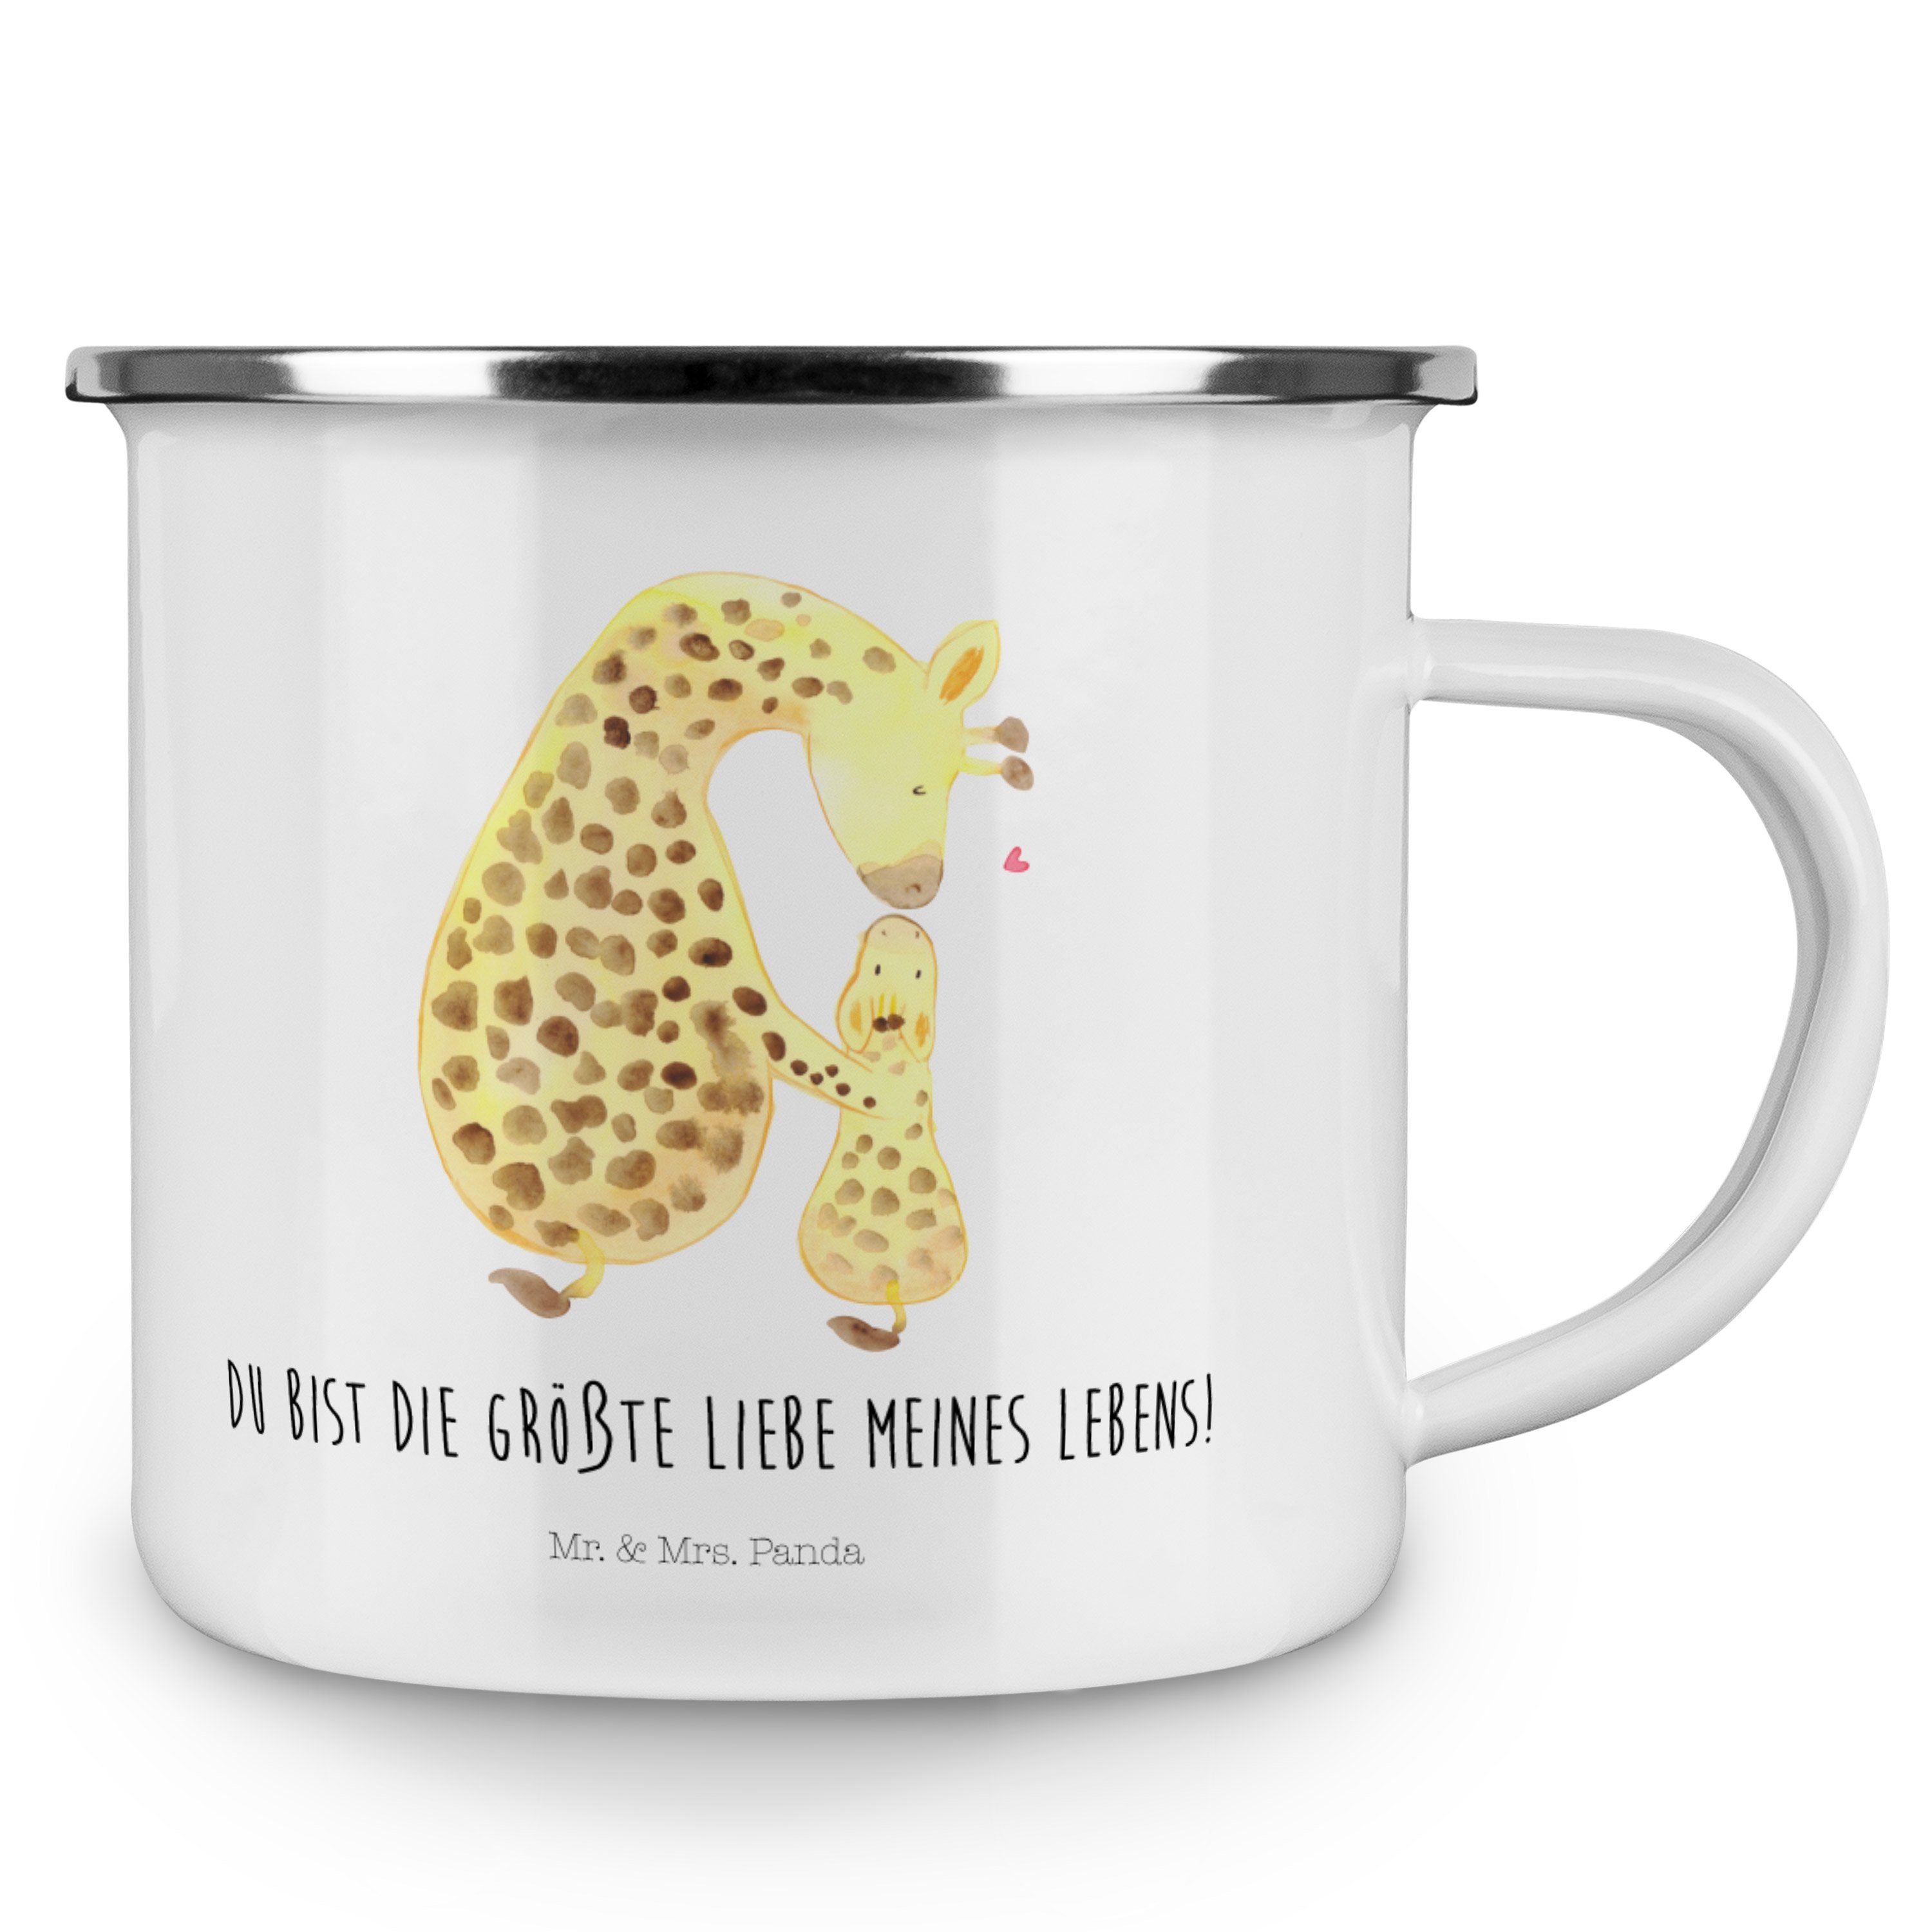 Mr. & Mrs. Panda - Weiß Emaille - Geschenk, mit Kind Tochter, Becher Giraffe Lieblingsmens, Wildtiere